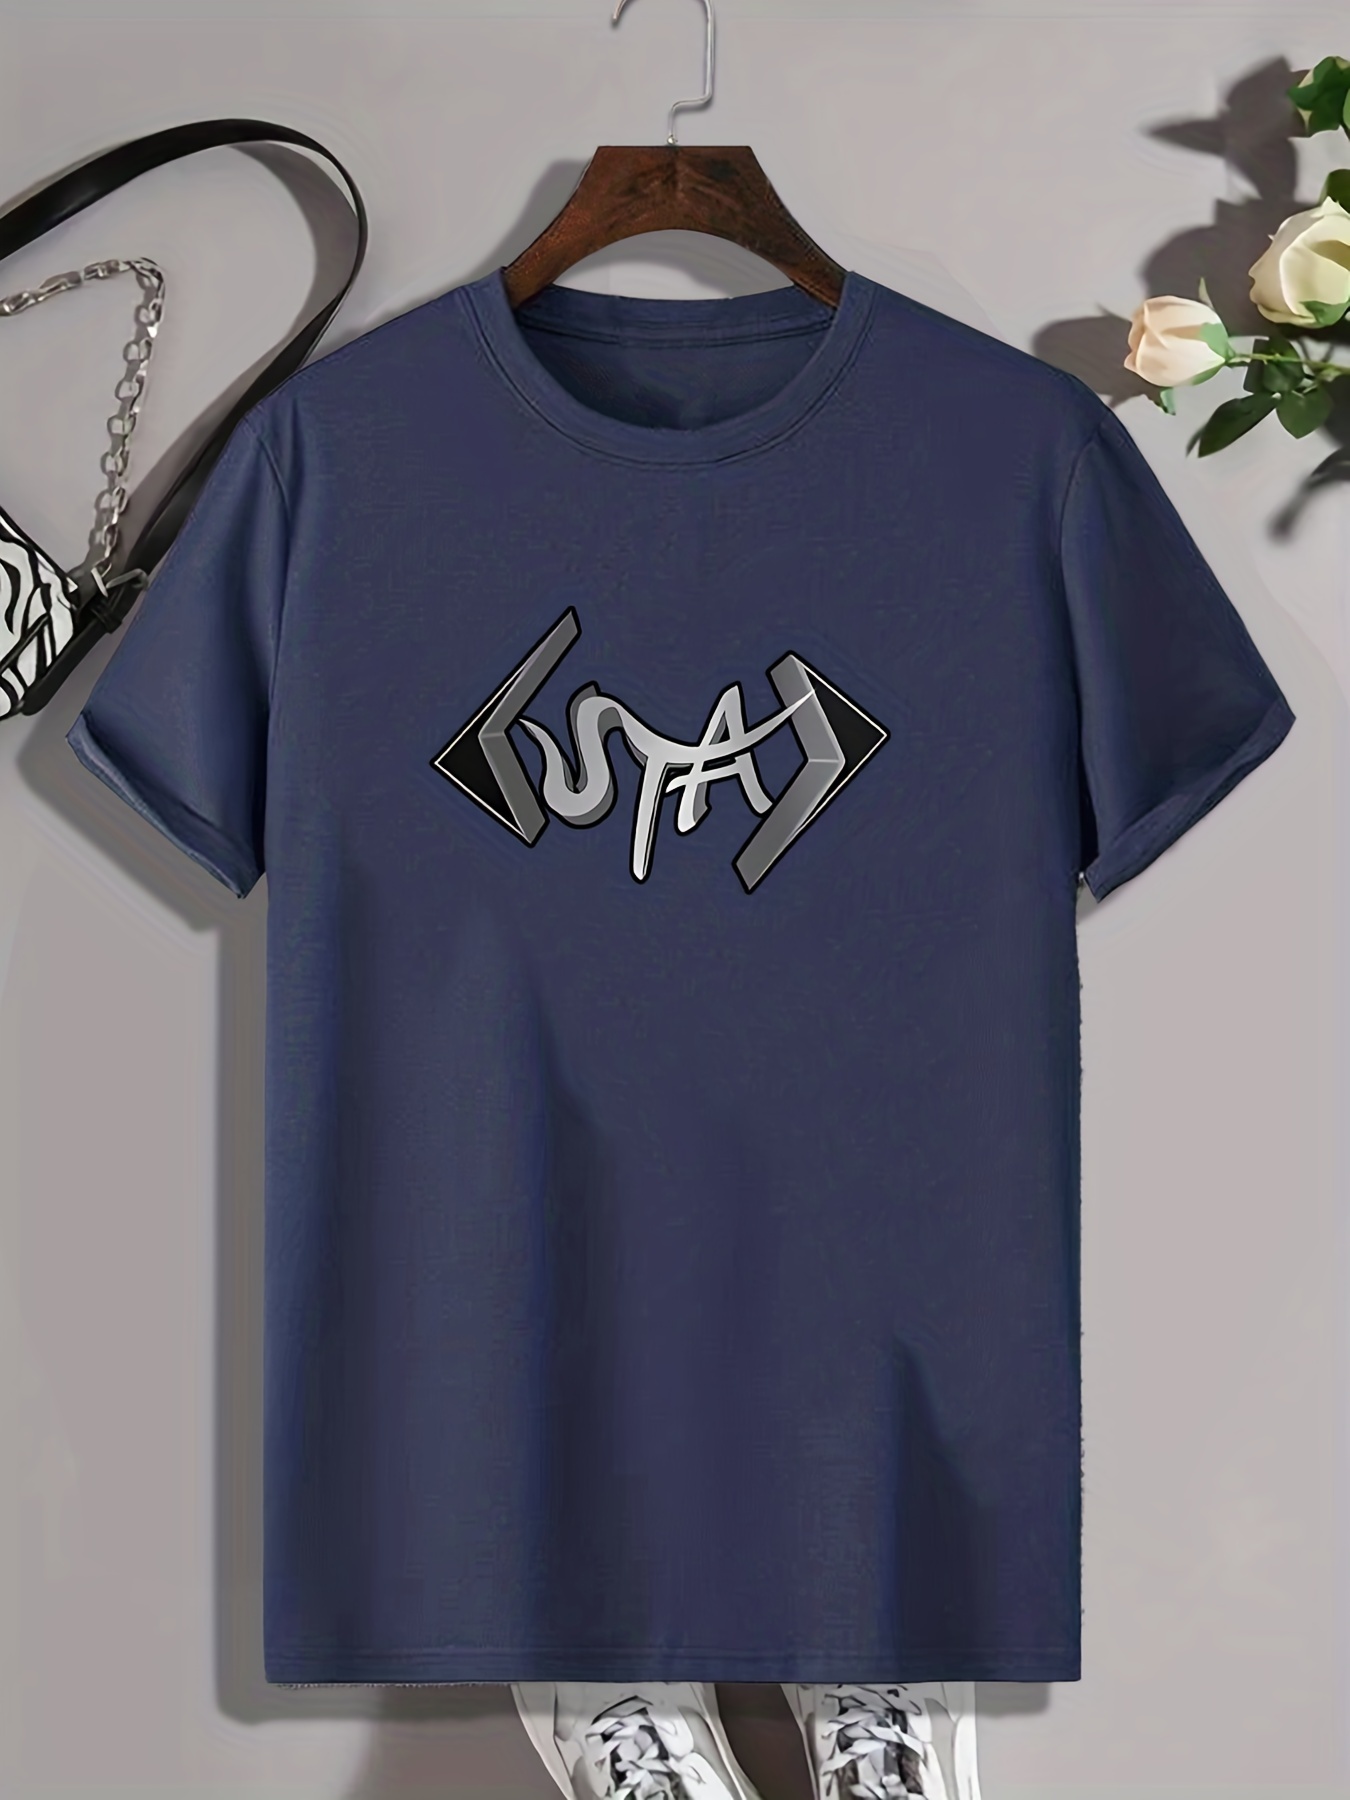 uta' Print Men's T-shirt, Graphic Tee Men's Summer Clothes, Men's